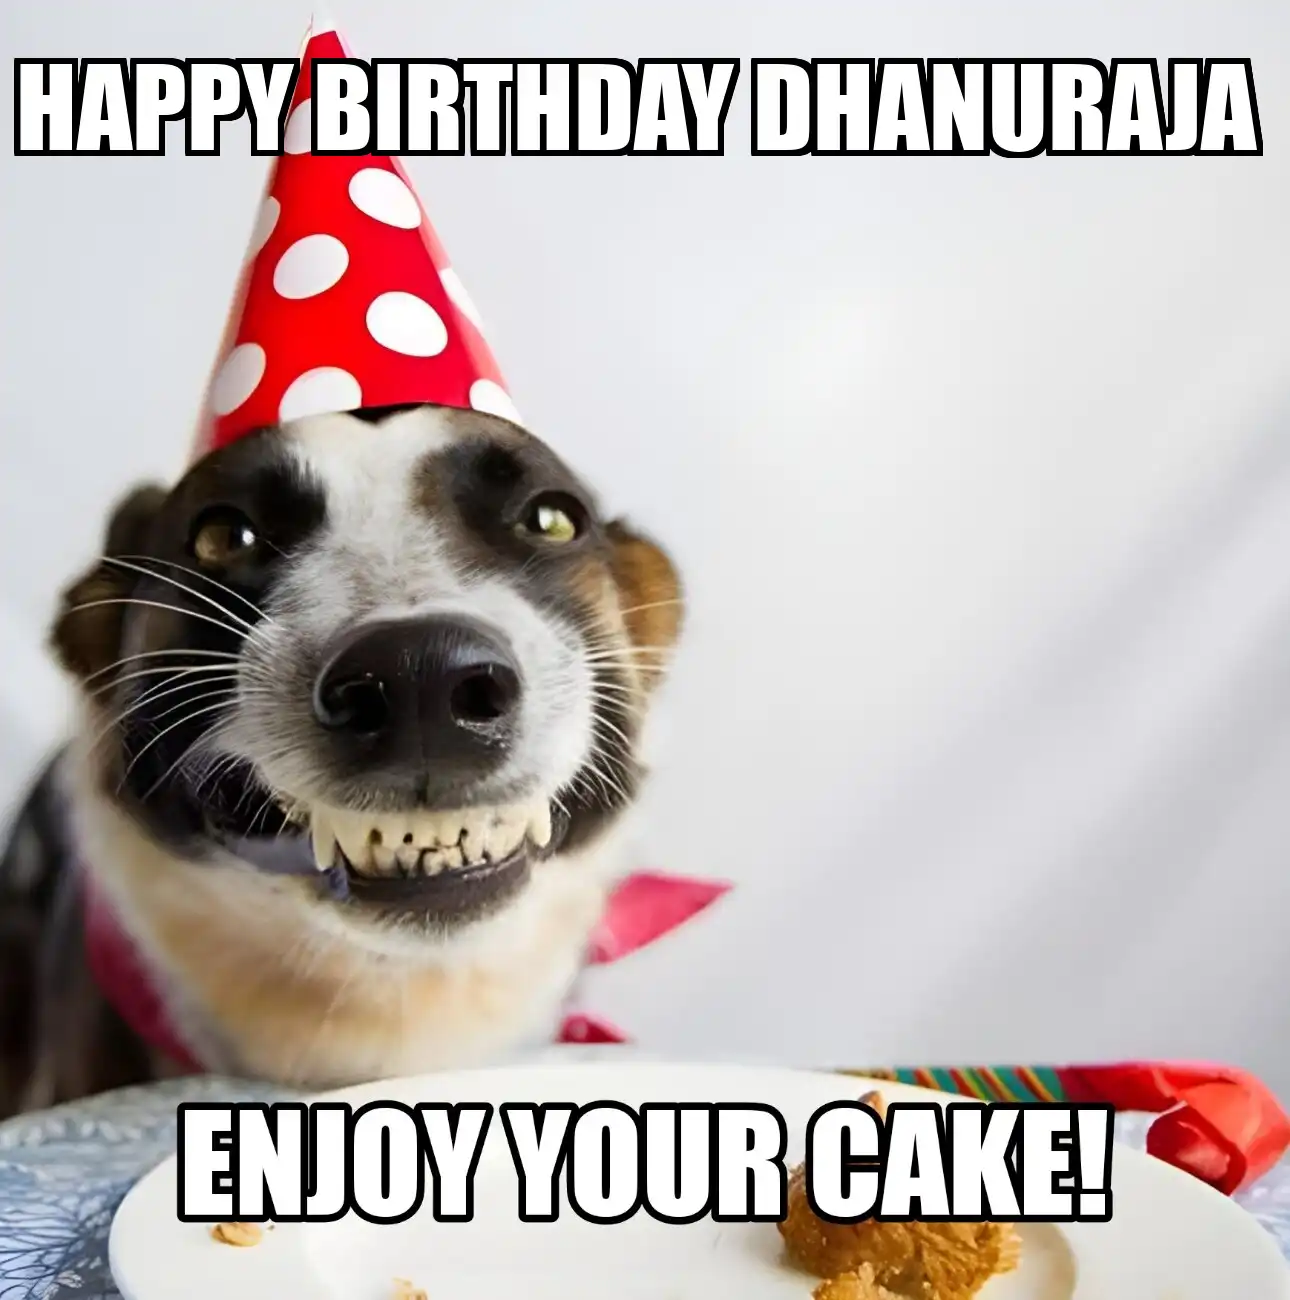 Happy Birthday Dhanuraja Enjoy Your Cake Dog Meme